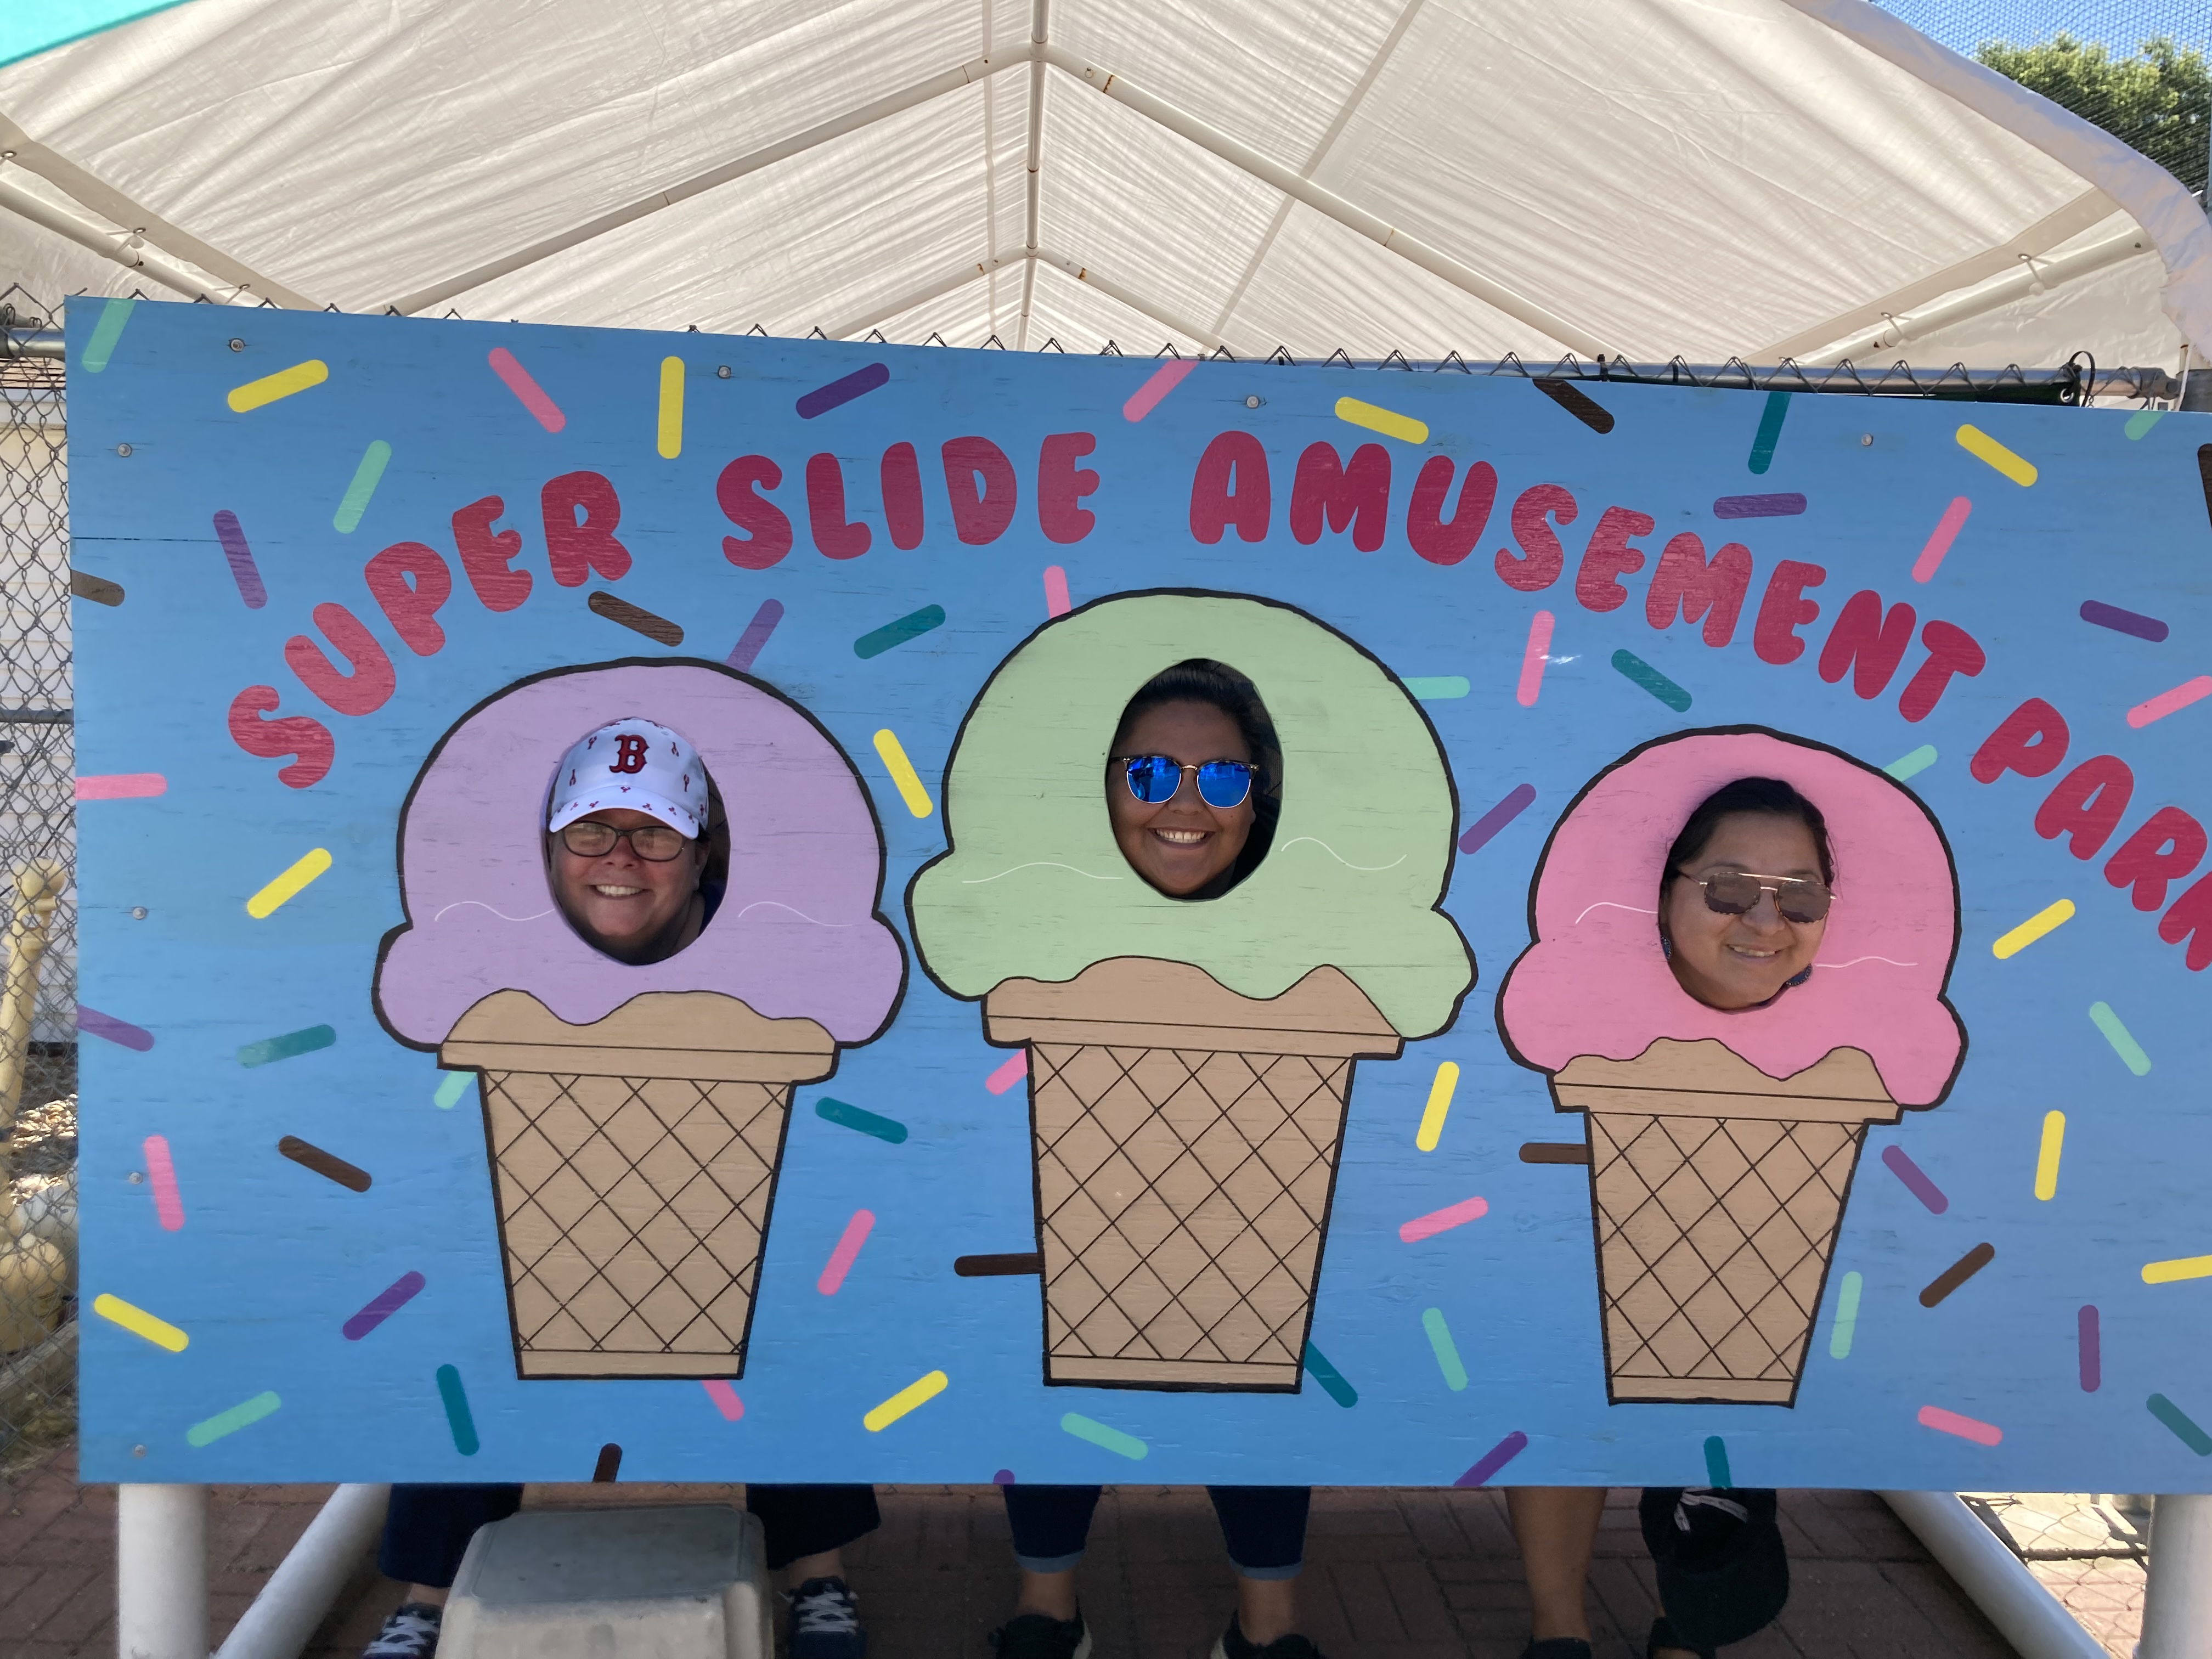 3 staff member in ice cream cone cut outs